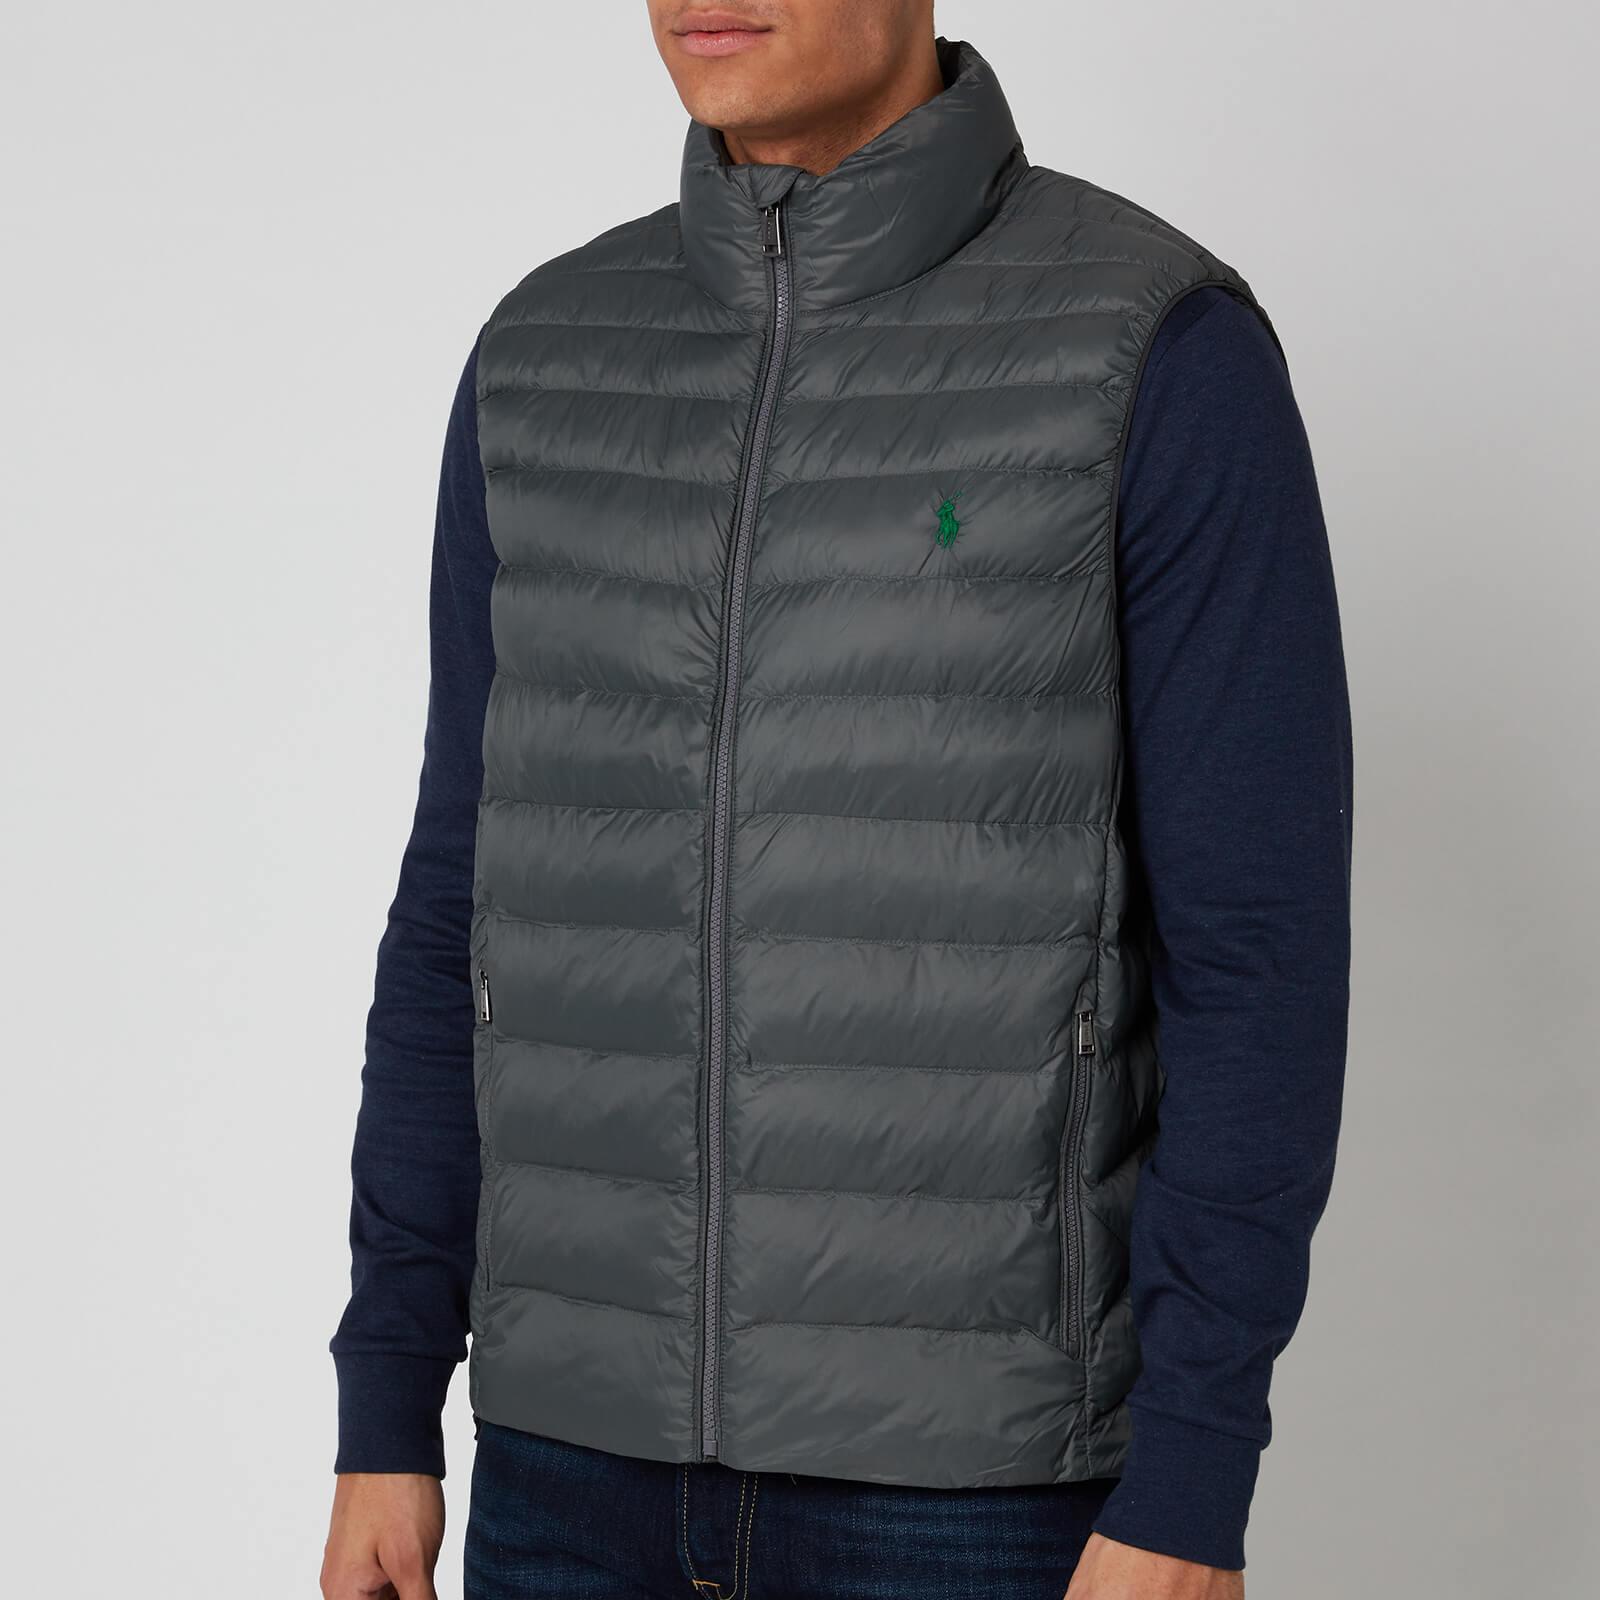 Polo Ralph Lauren Synthetic Recycled Nylon Terra Vest in Grey (Gray) for  Men - Lyst